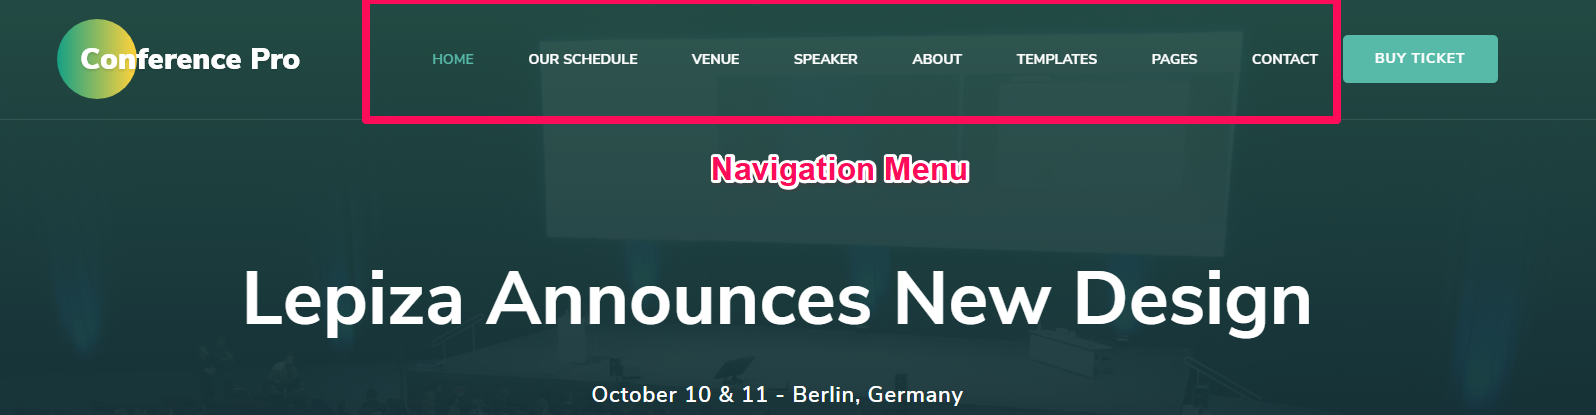 navigation menu the conference pro